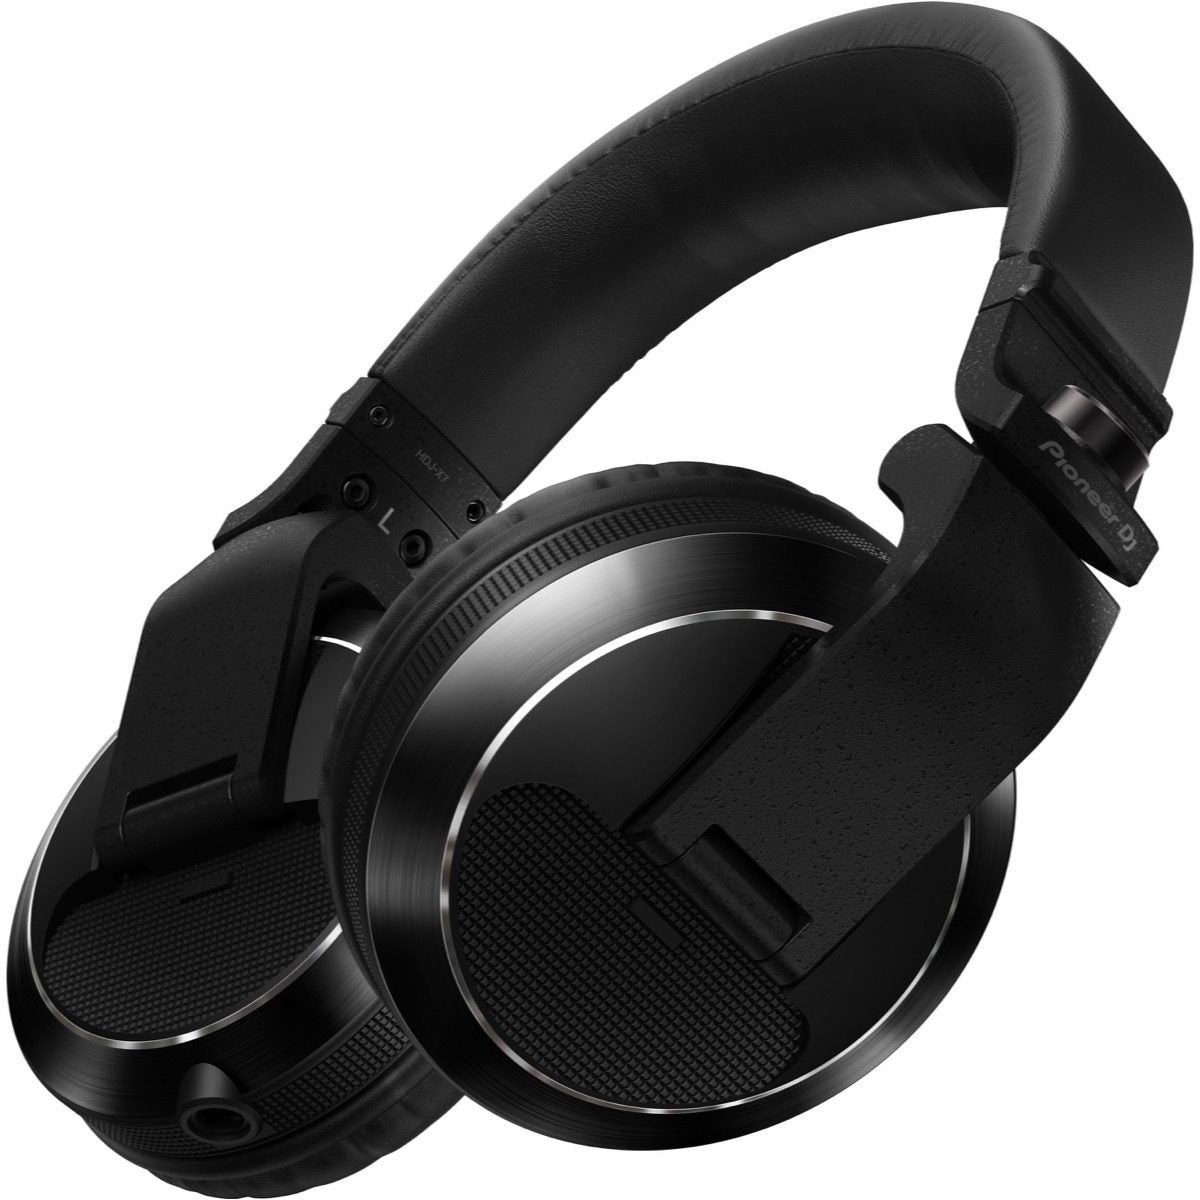 Pioneer DJ HDJ-X7 DJ Headphones, Black